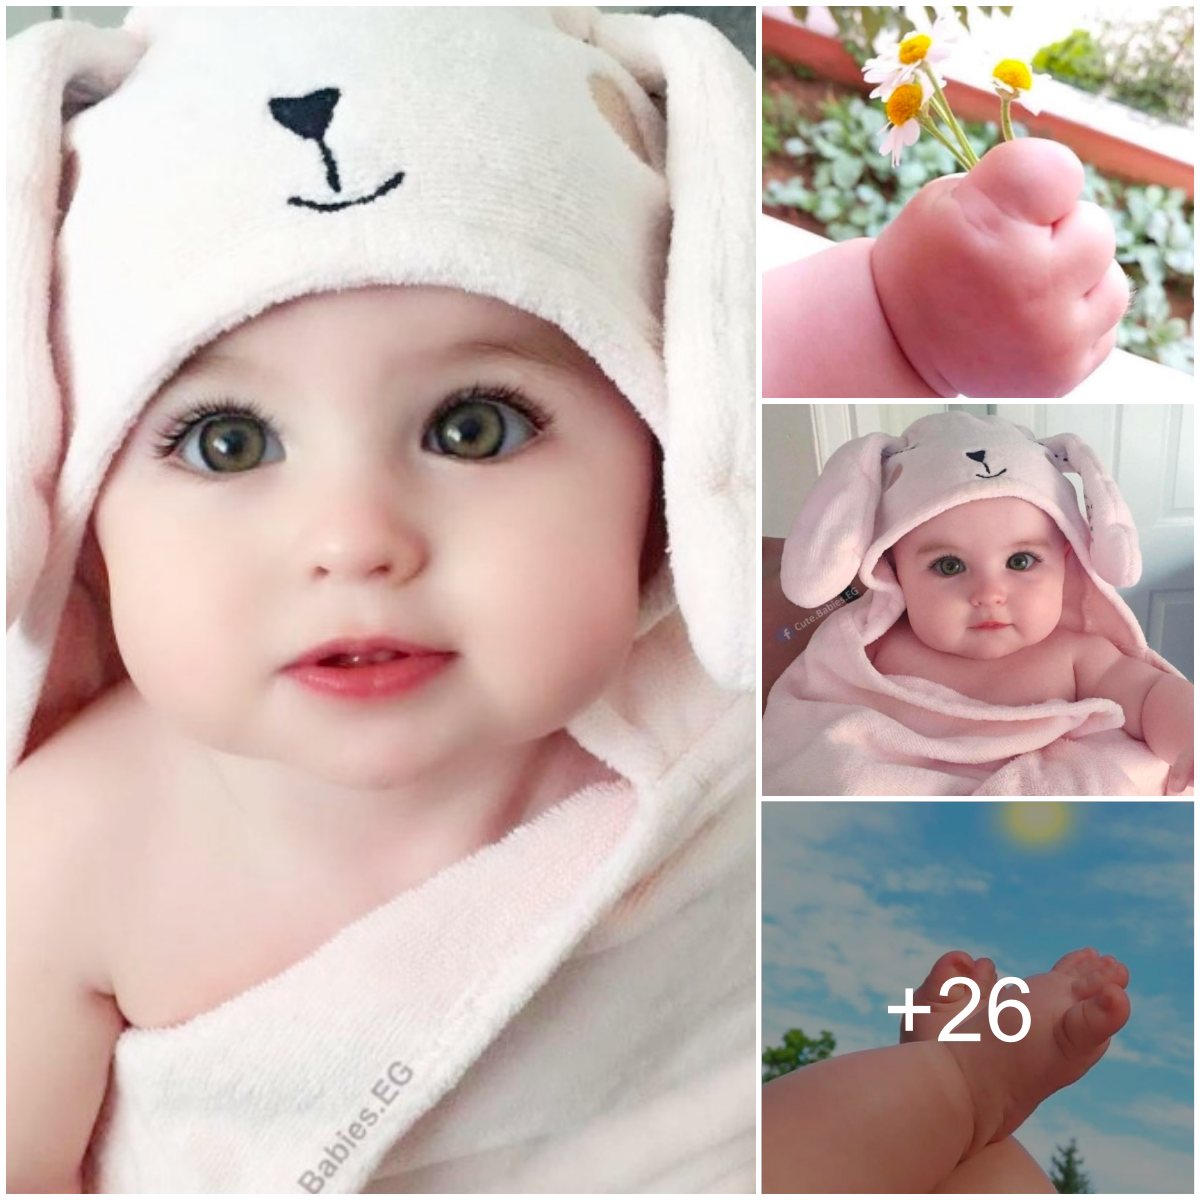 Enchanting Baby Faces: Irresistible Cuteness That Captivates!